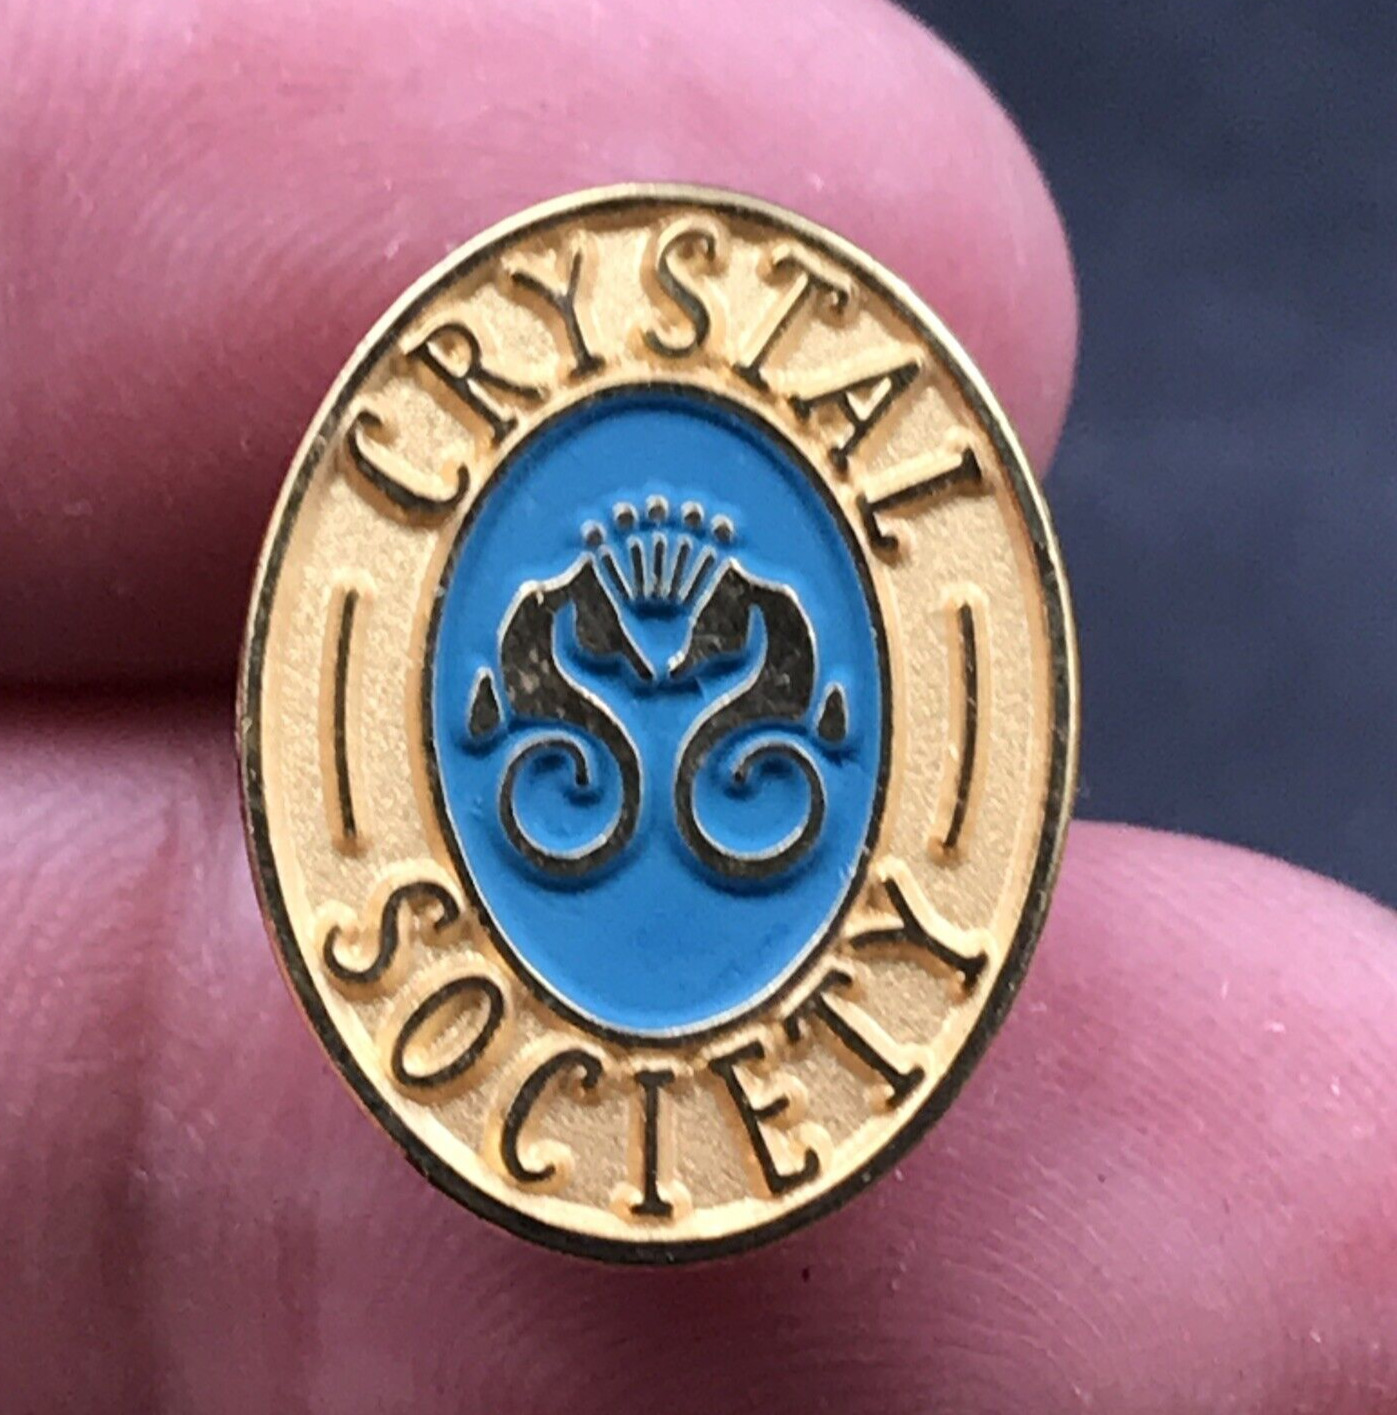 Vintage Crystal Society Lapel Pin Cruise Ship Loyalty Program 5/8